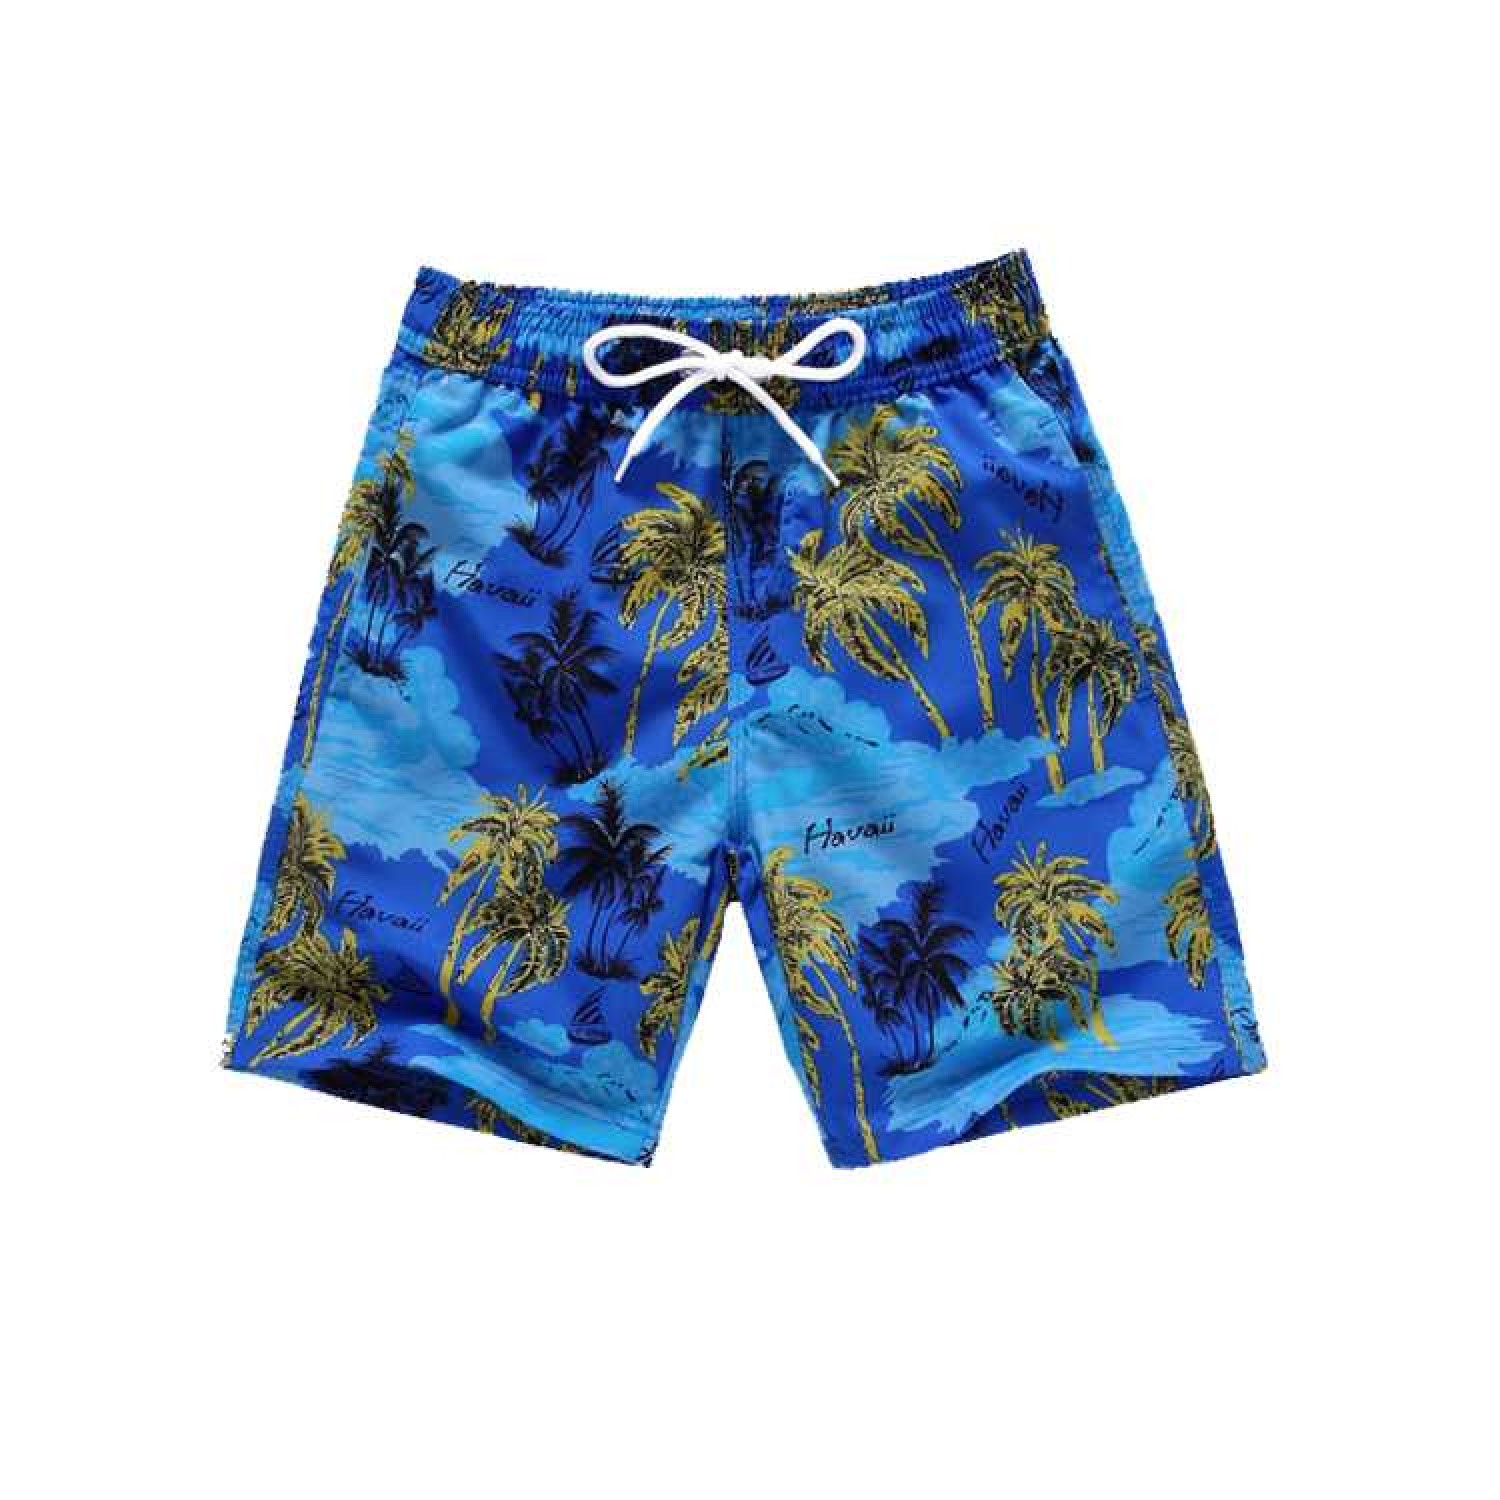 RTRTRT 2020 Creative Ba-pe Blo-od Sh-ark Slim Fit Swim Trunks Beach Half Pants for Teens Boys Quick Dry Swimwear 